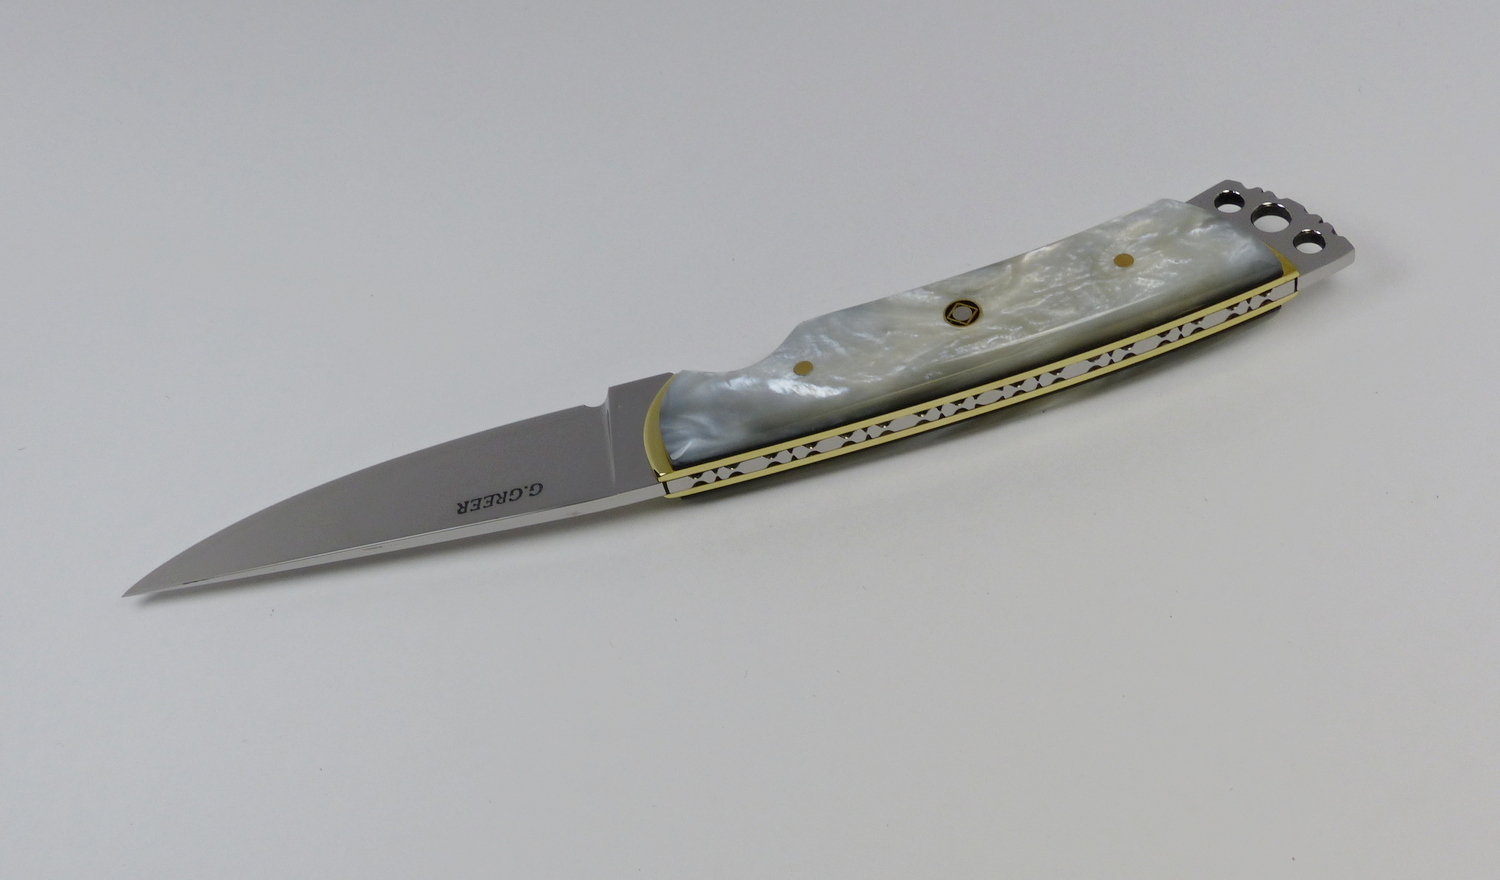 Art knife showing fancy filework along handle spine - S18